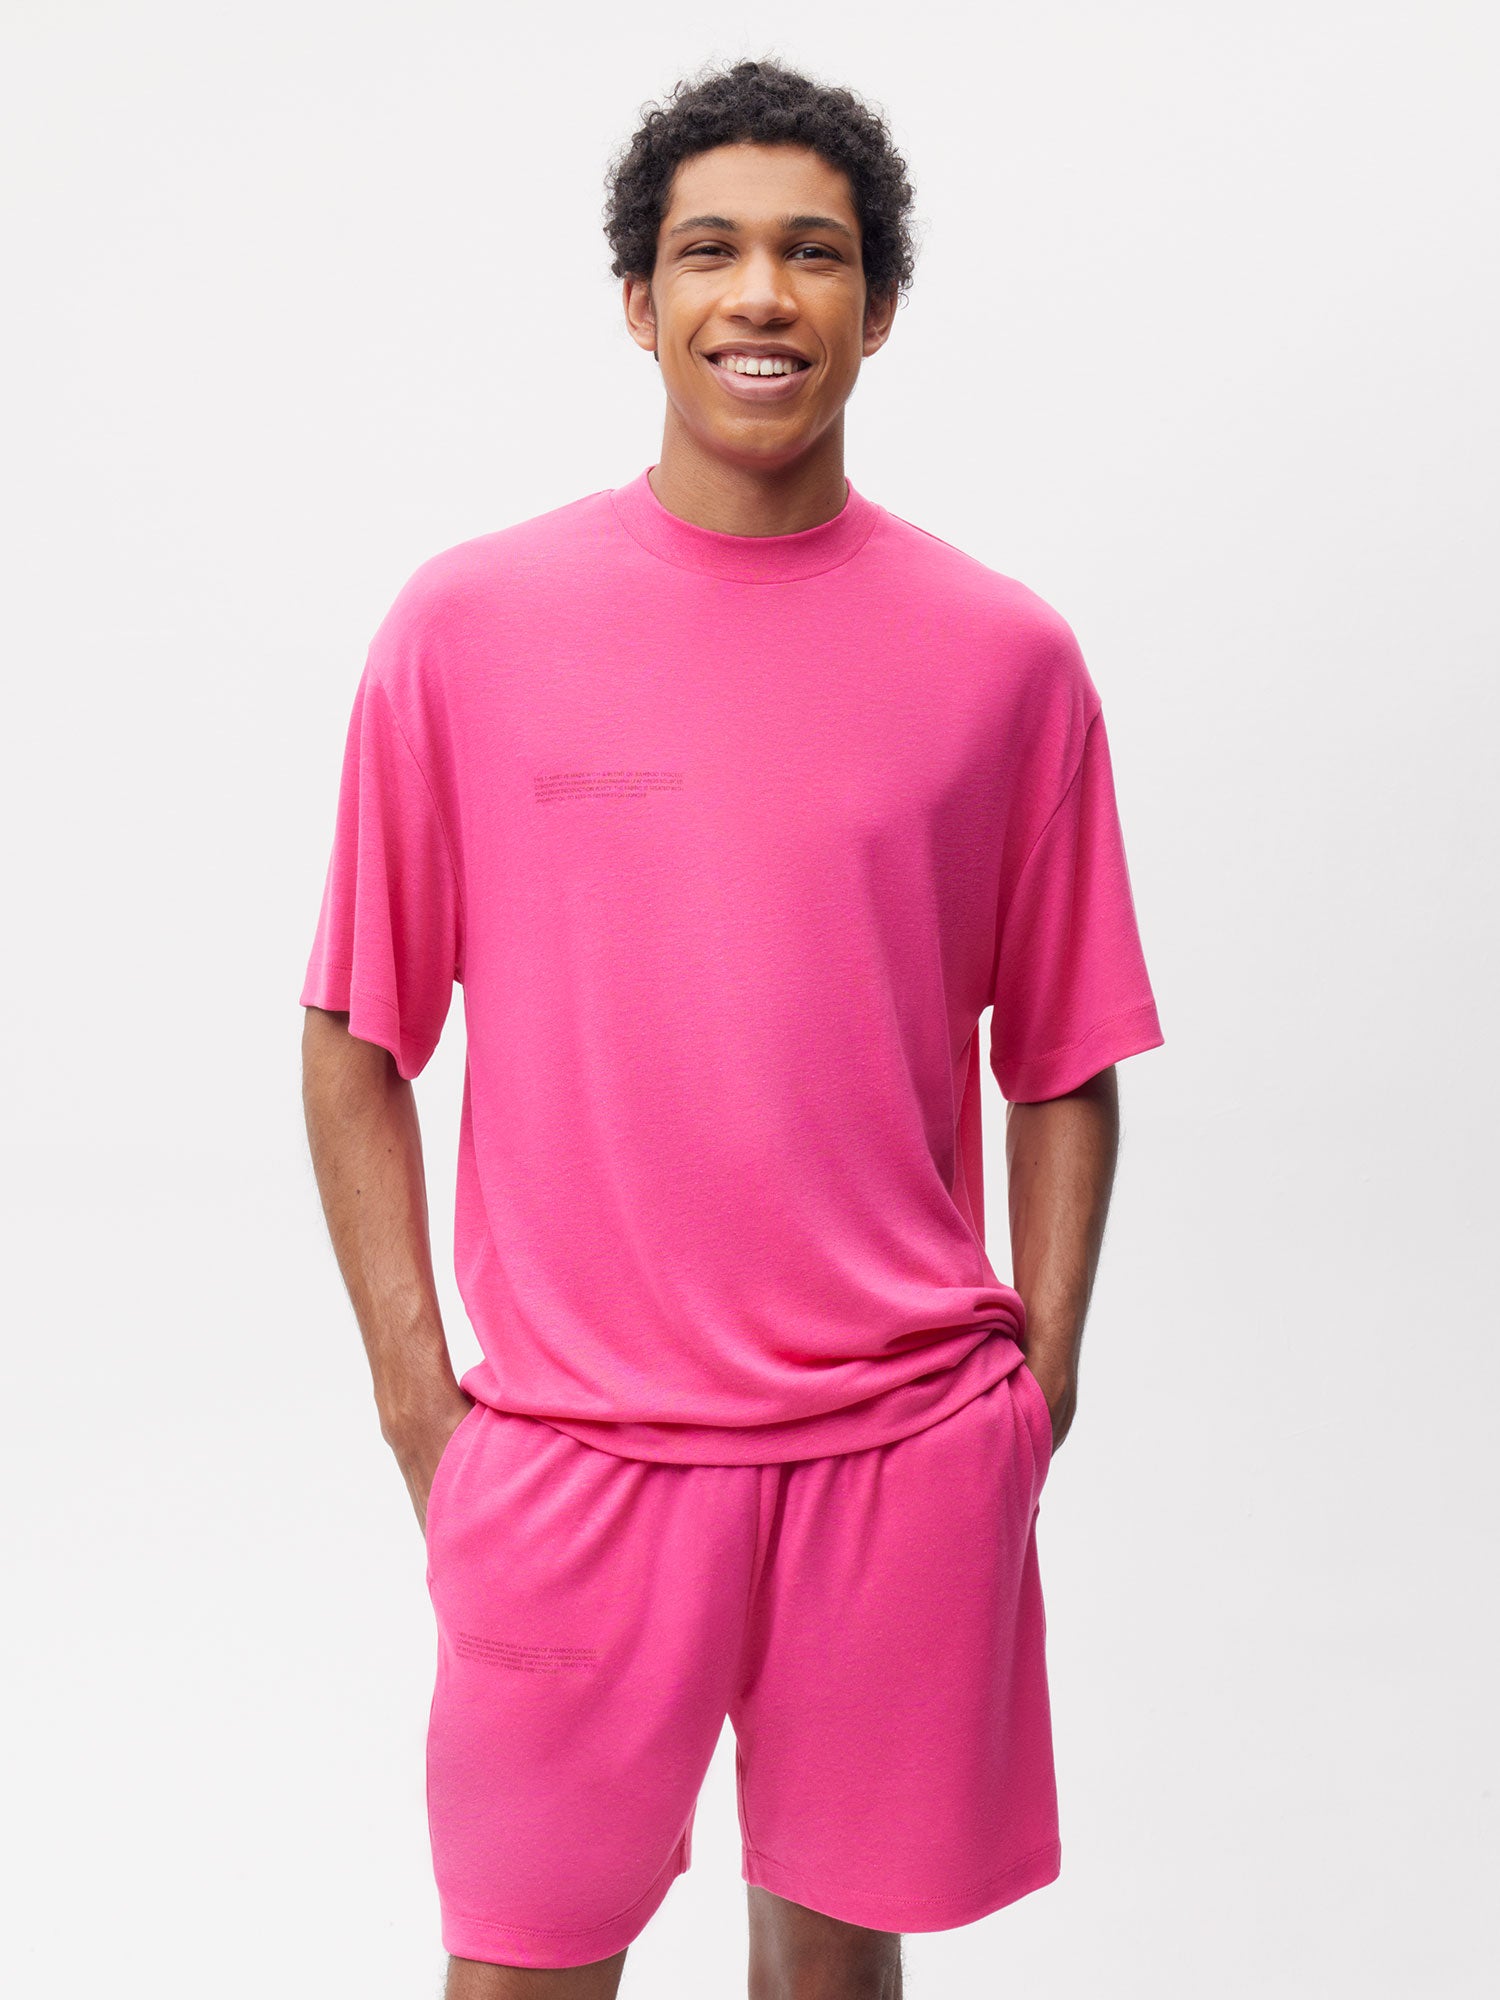 FRUTFIBER-Skater-T-Shirt-Tourmaline-Pink-Male-1